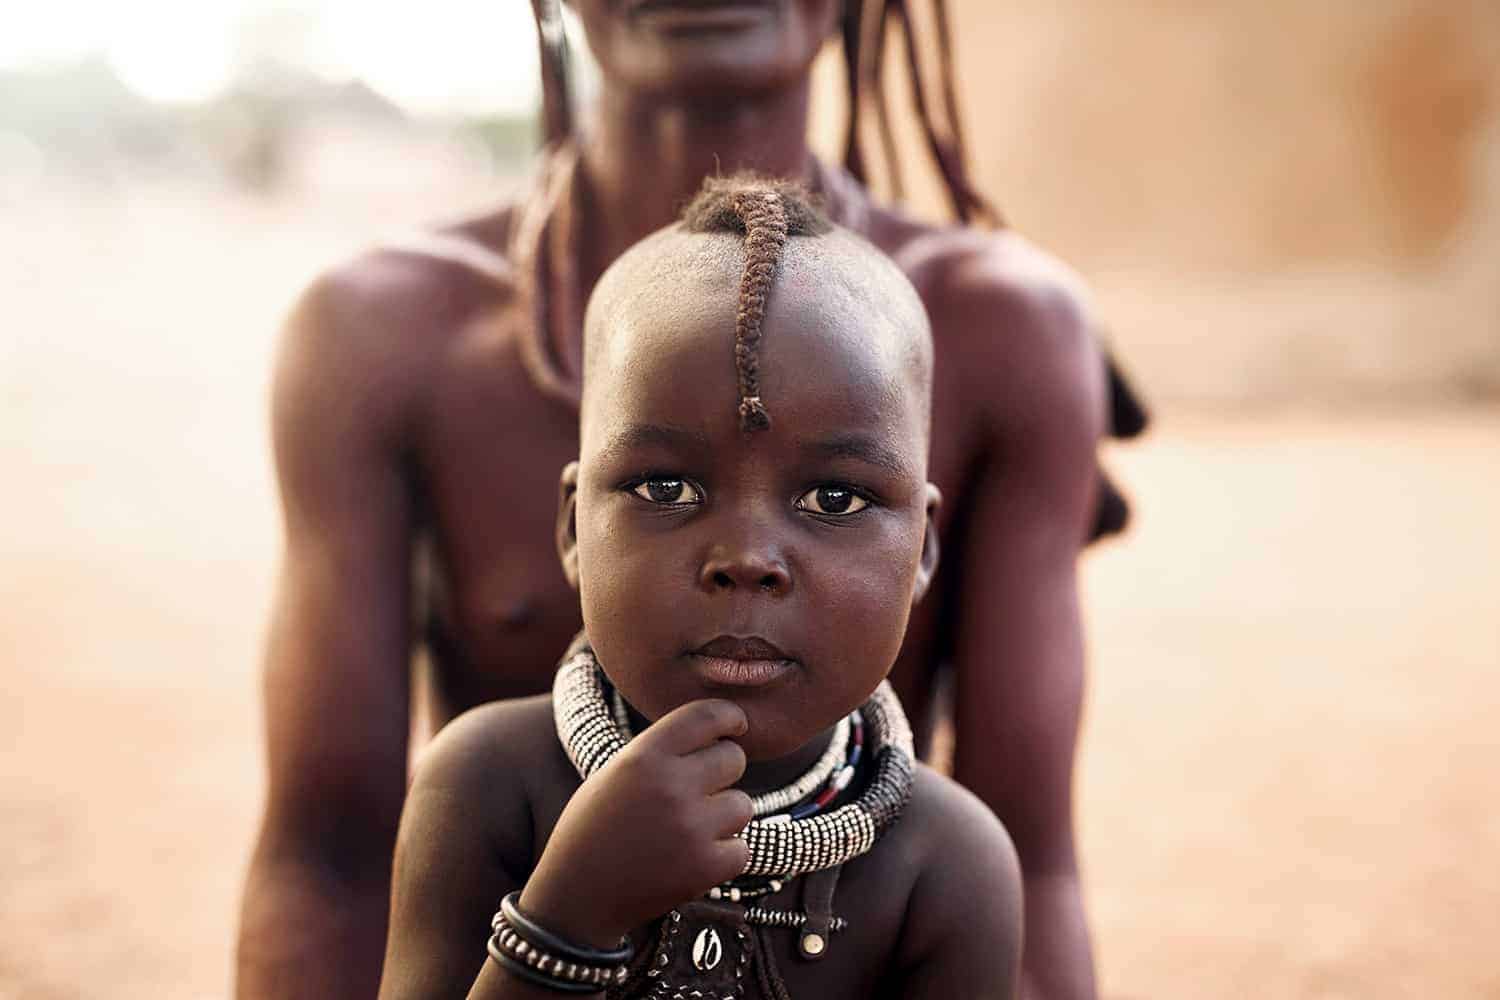 The Himba: A Tribal Portrait Shoot